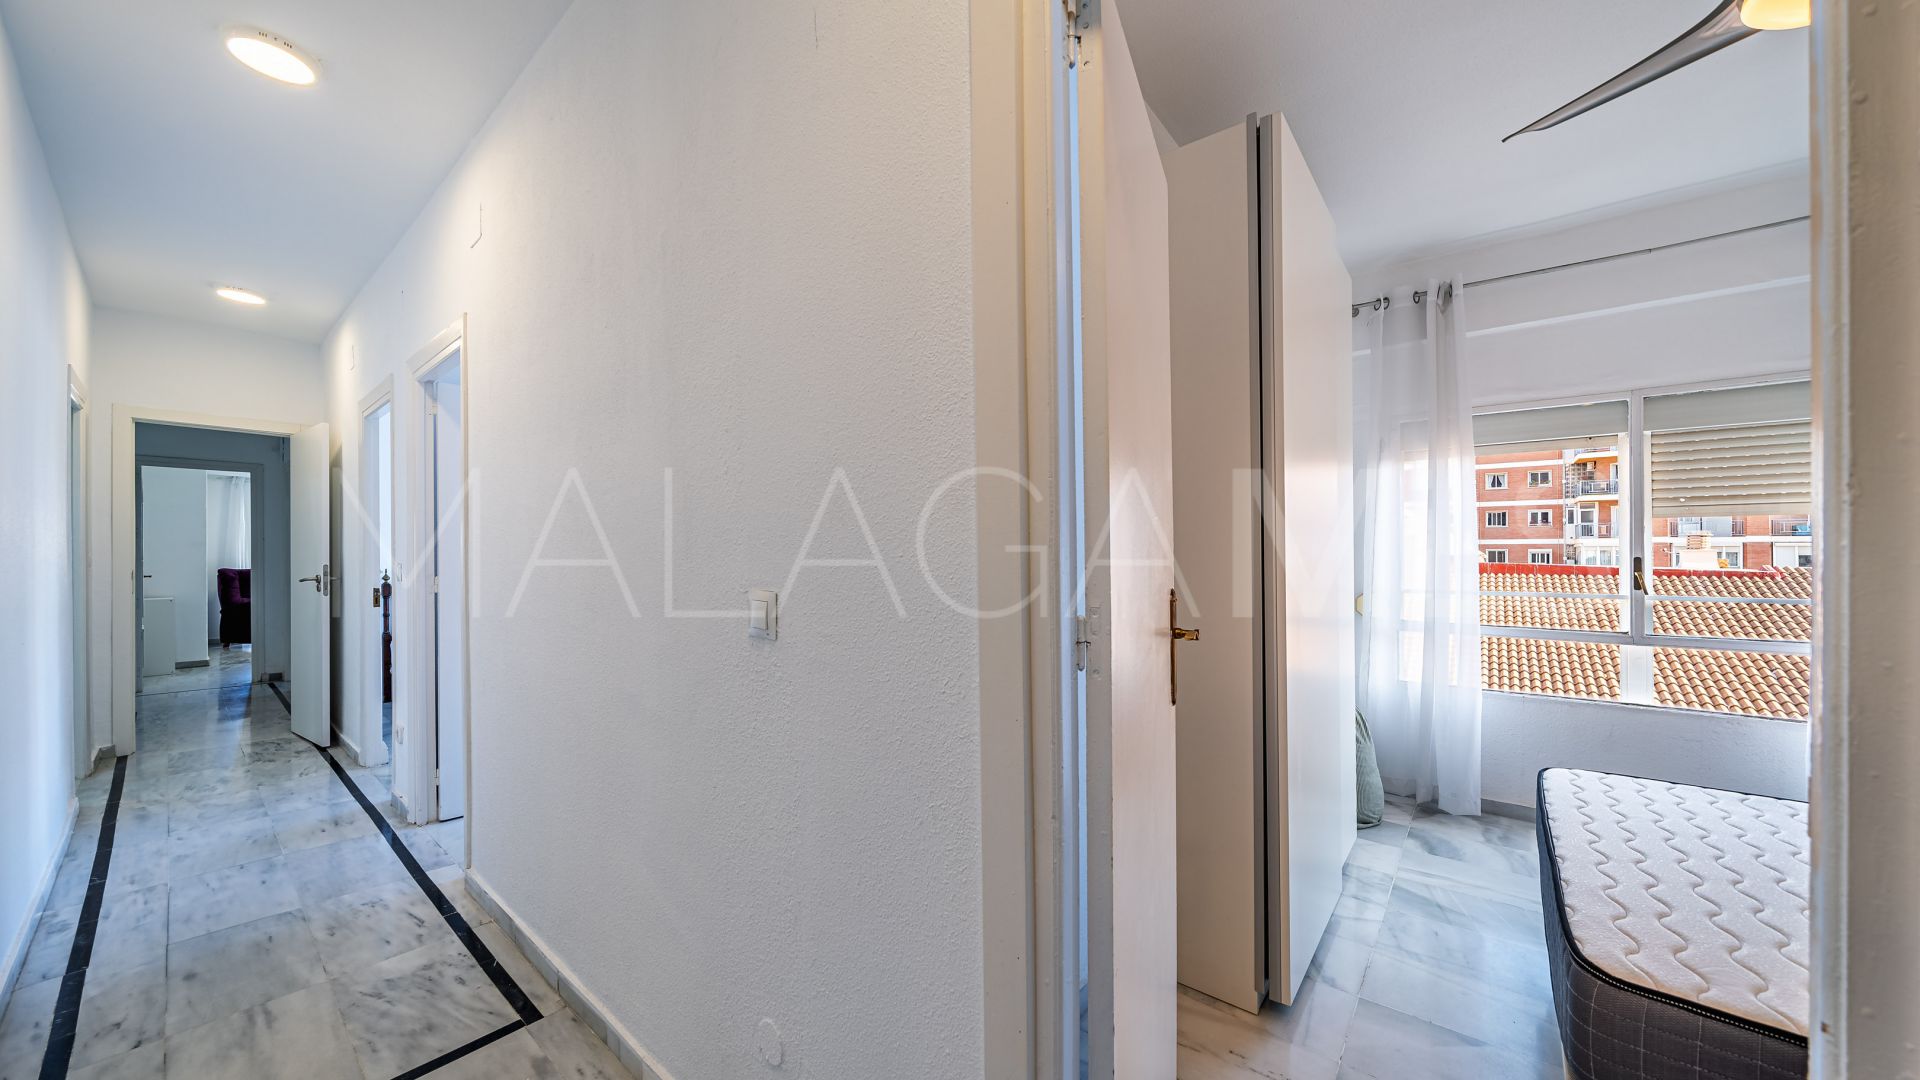 For sale La Malagueta - La Caleta flat